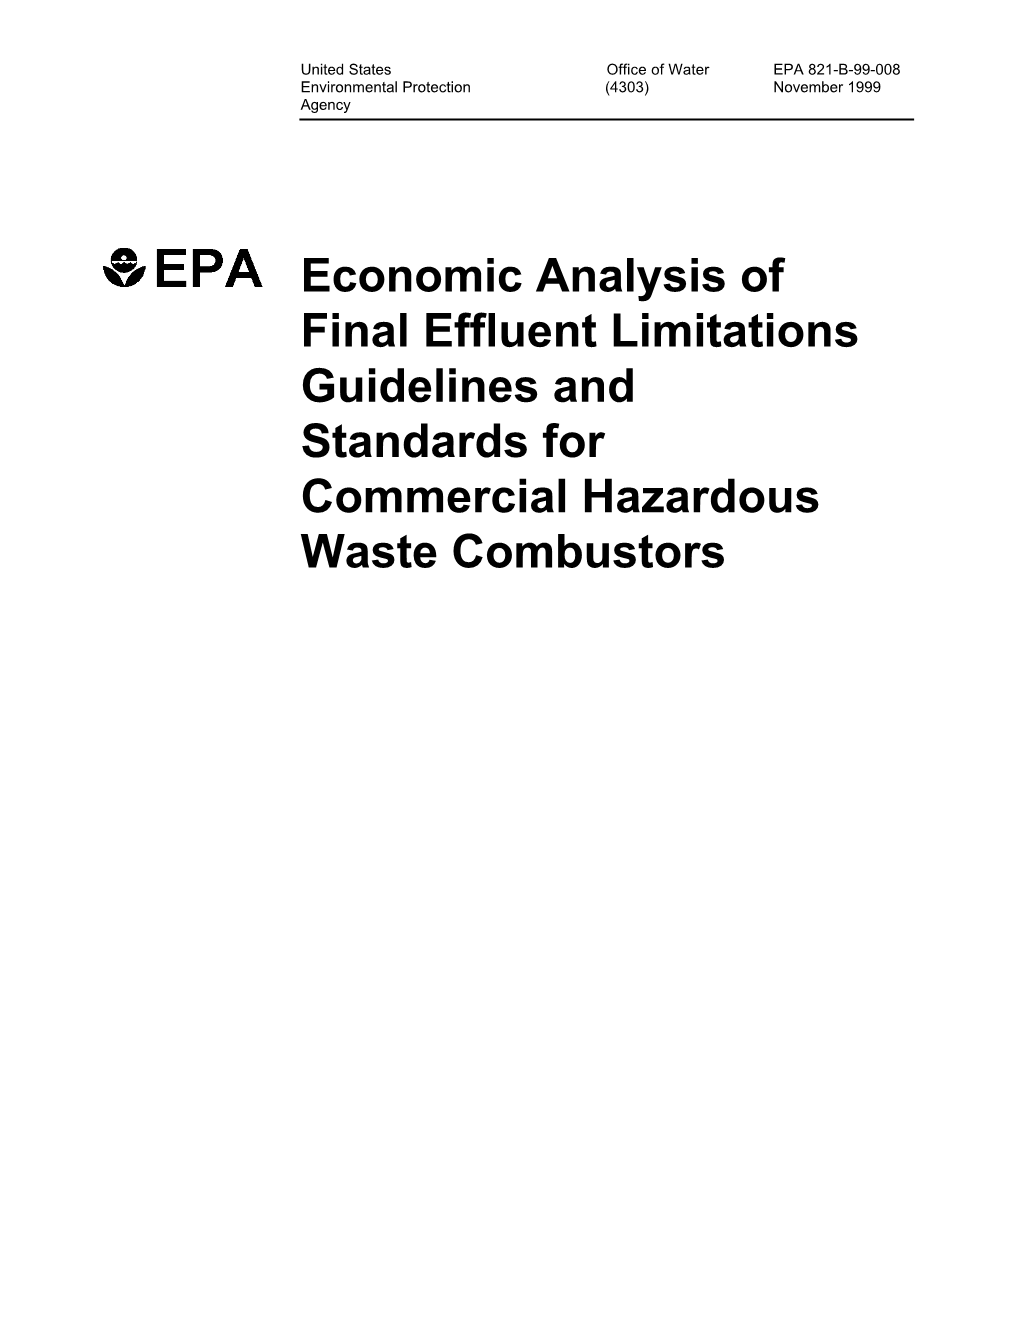 Economic Analysis of Commercial Hazardous Waste Combustors